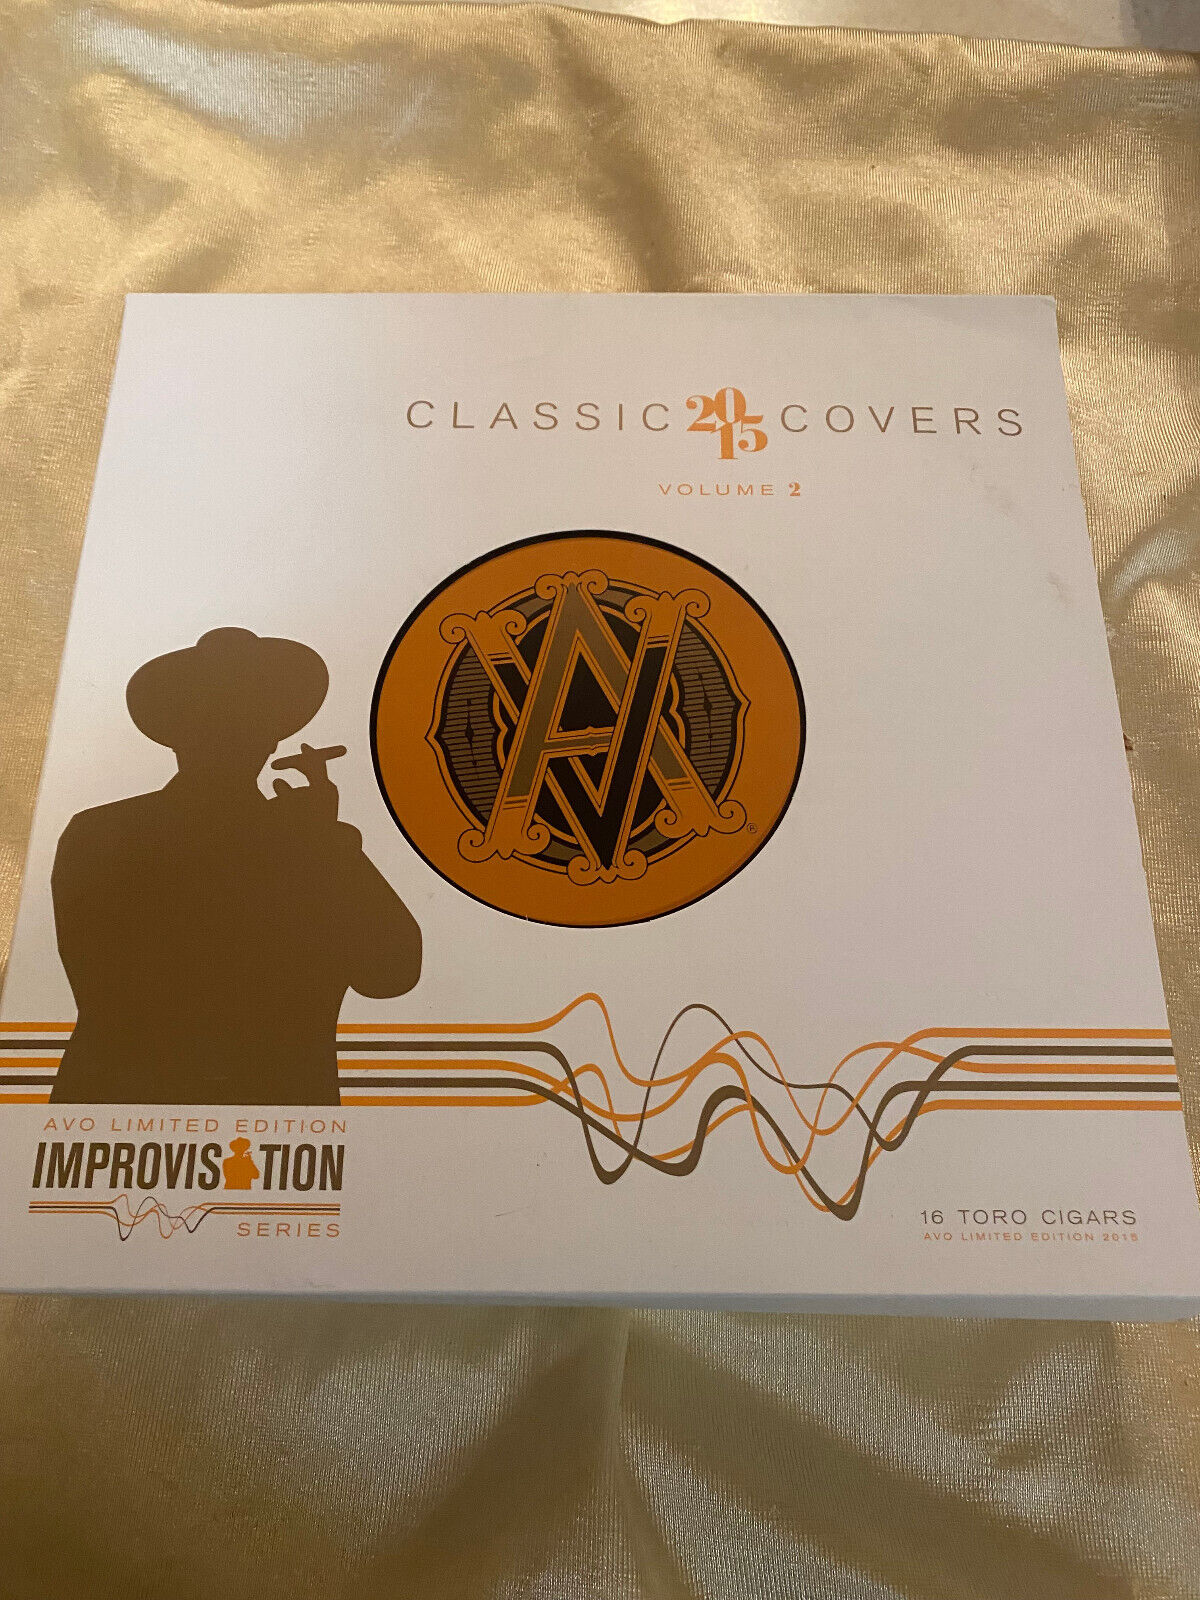 AVO Classic Covers Vol. 2 Rare Vinyl LP Record Cigar Box with slip case